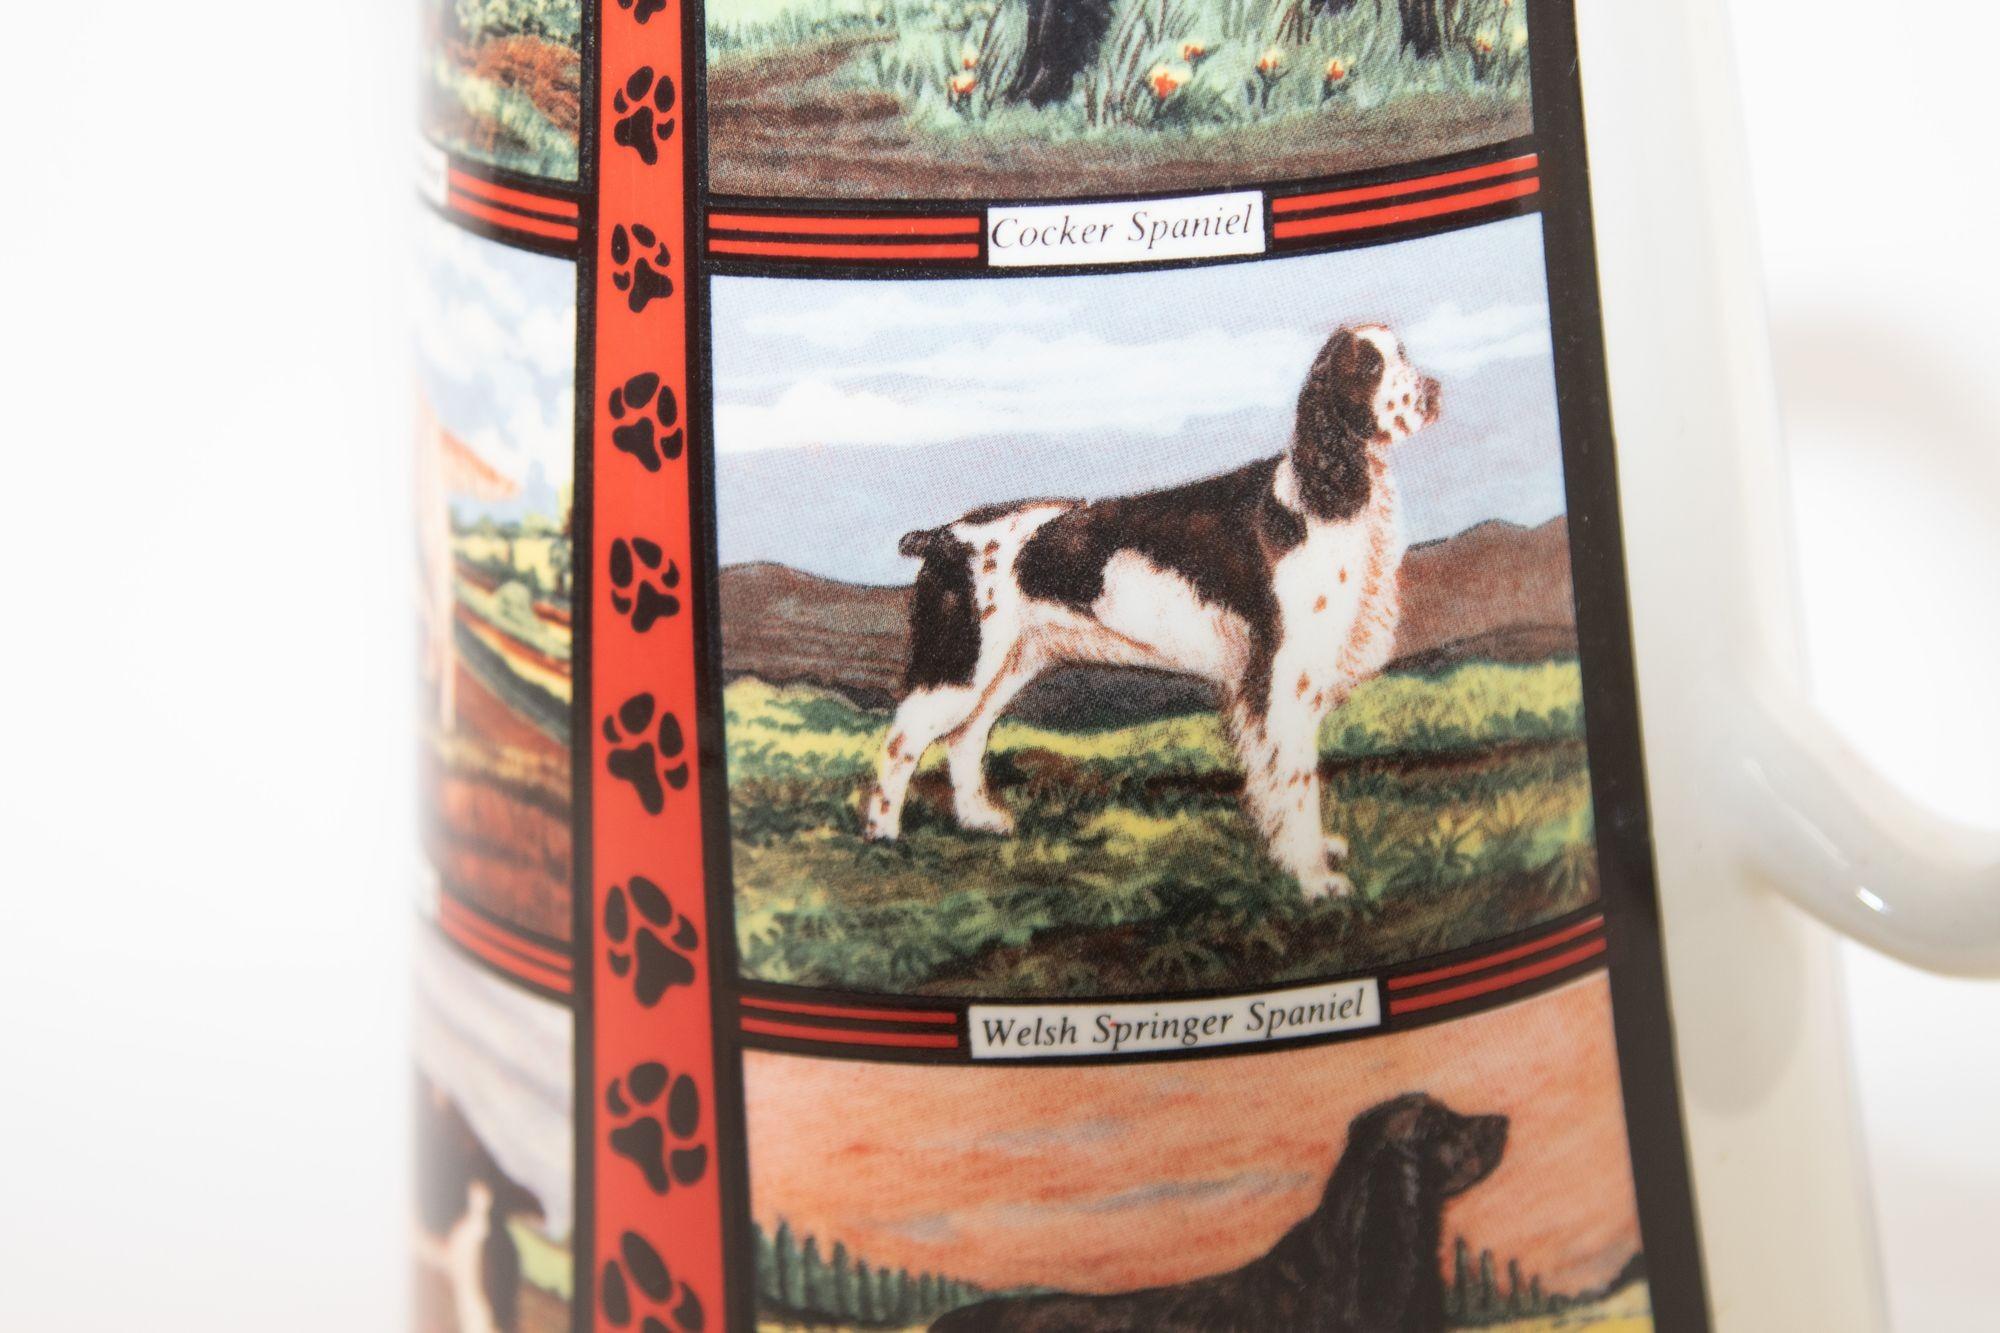 Vintage 1970s Ceramic Pitcher, Derbyshire England with Dog Breeds Pictures For Sale 12